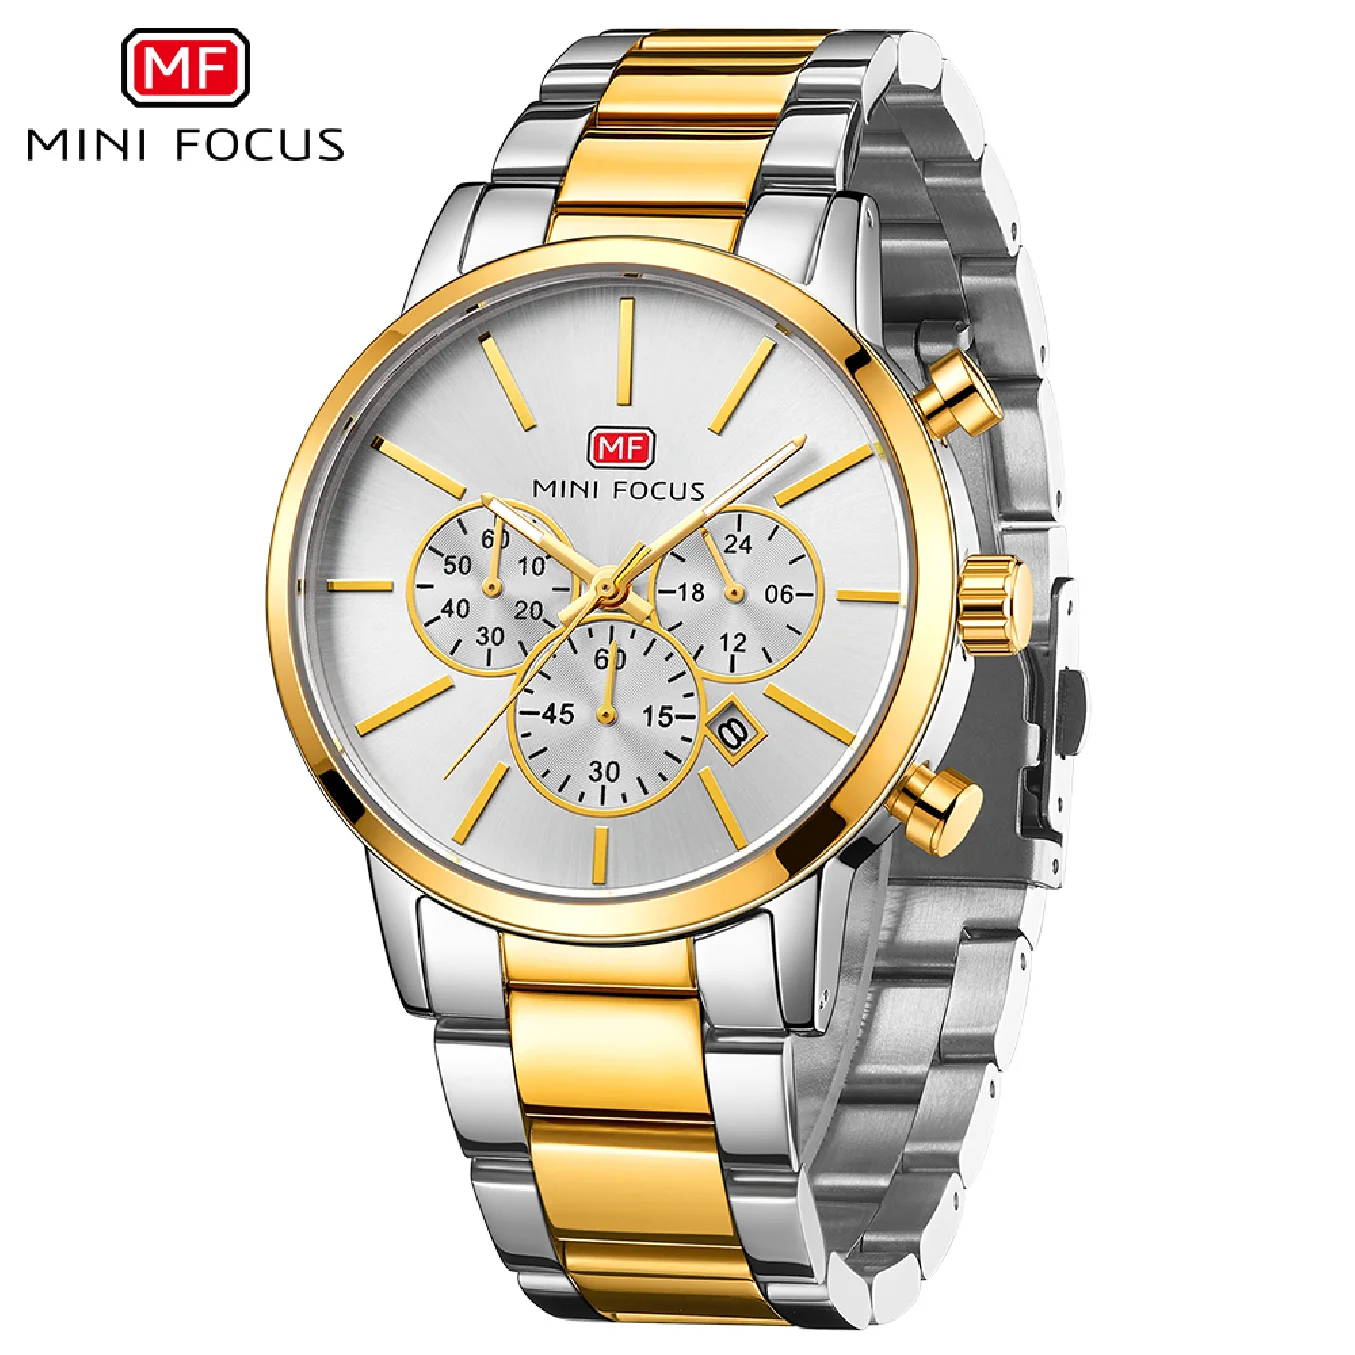 

MINI FOCUS Watches Men Top Luxury Brand Quartz Business Watch Steel Band Casual Waterproof Wriswatch Male Clock